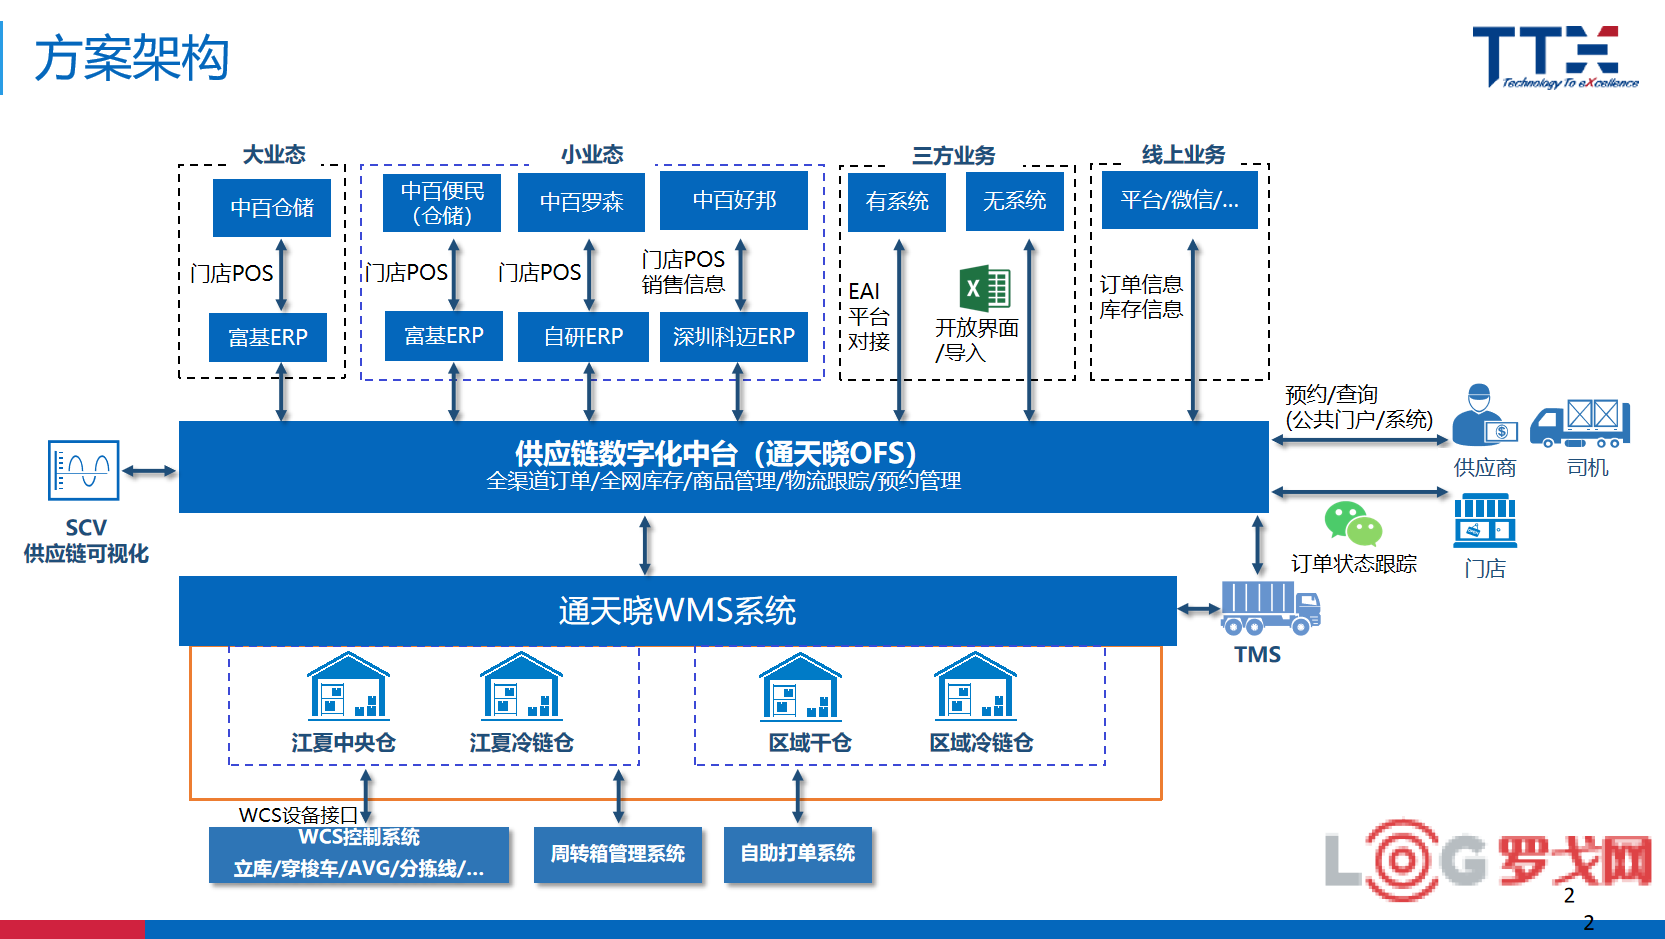 2022 LOG供应链&合同物流创新优秀企业--上海通天晓信息技术有限公司